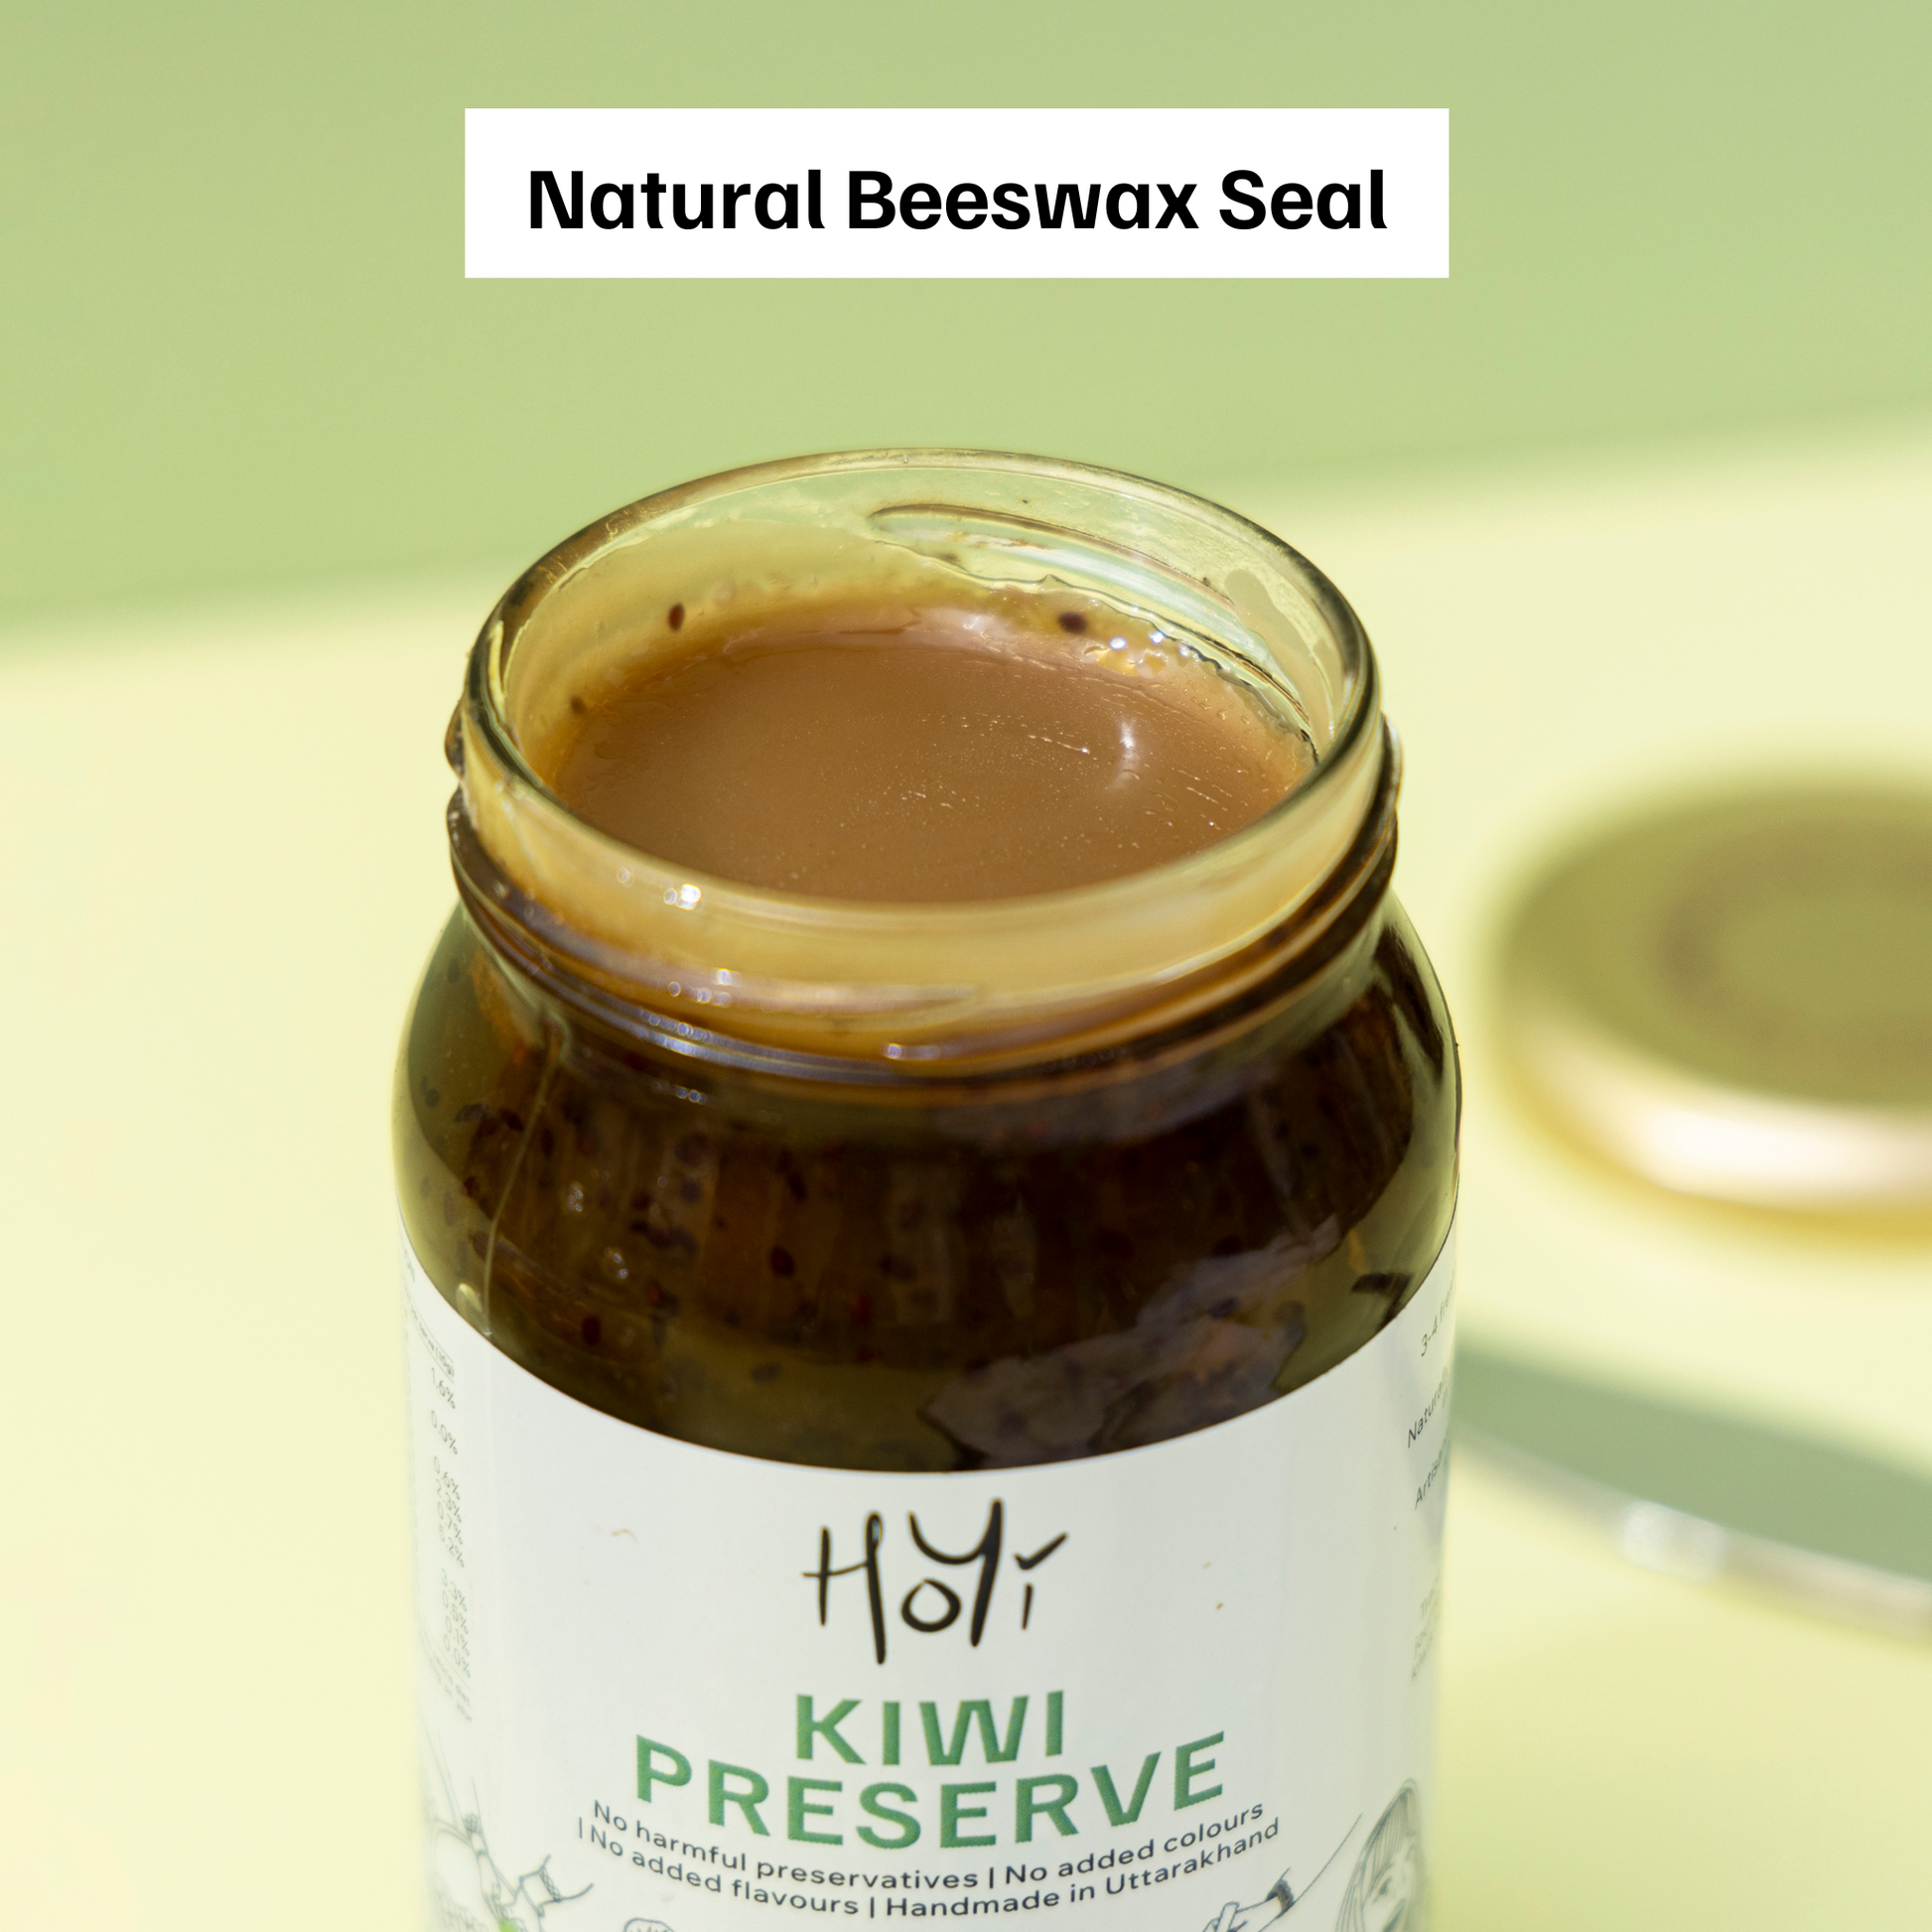 HoYi Kiwi Preserve 490gm Handmade and Organic (Naturally sealed using beeswax)